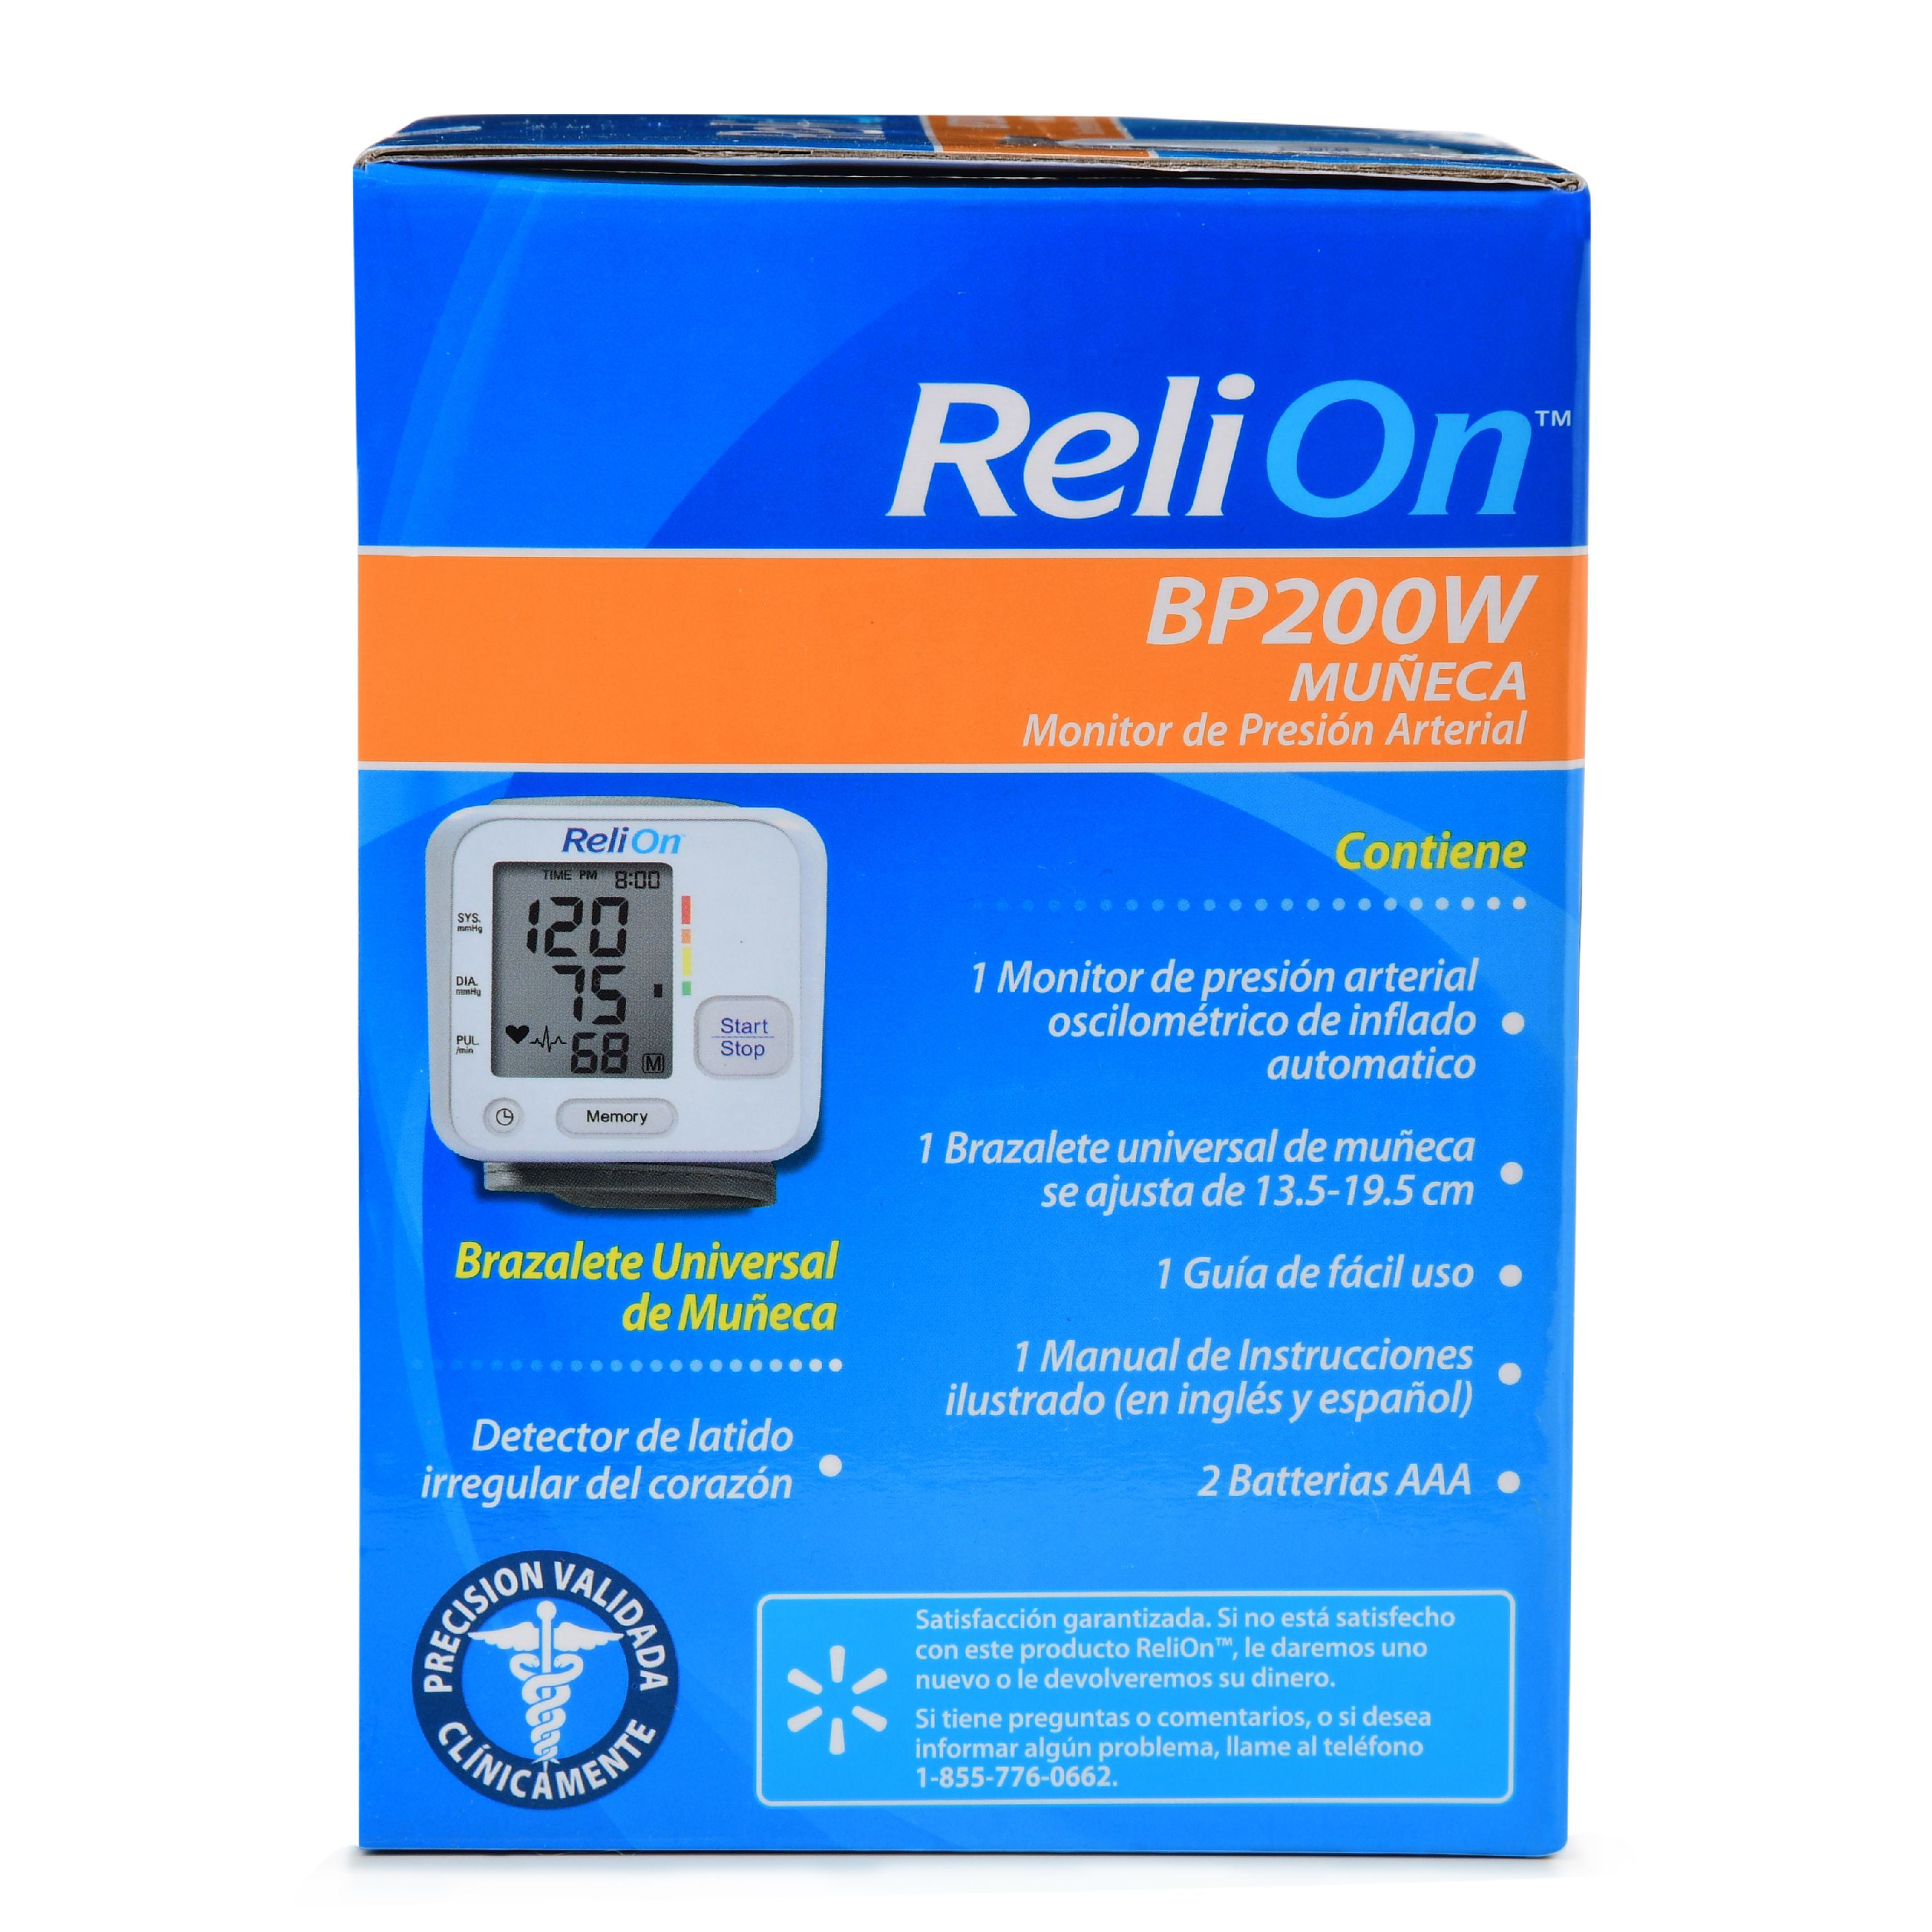 Relion Wrist Blood Pressure Monitor Symbols - Captions Energy